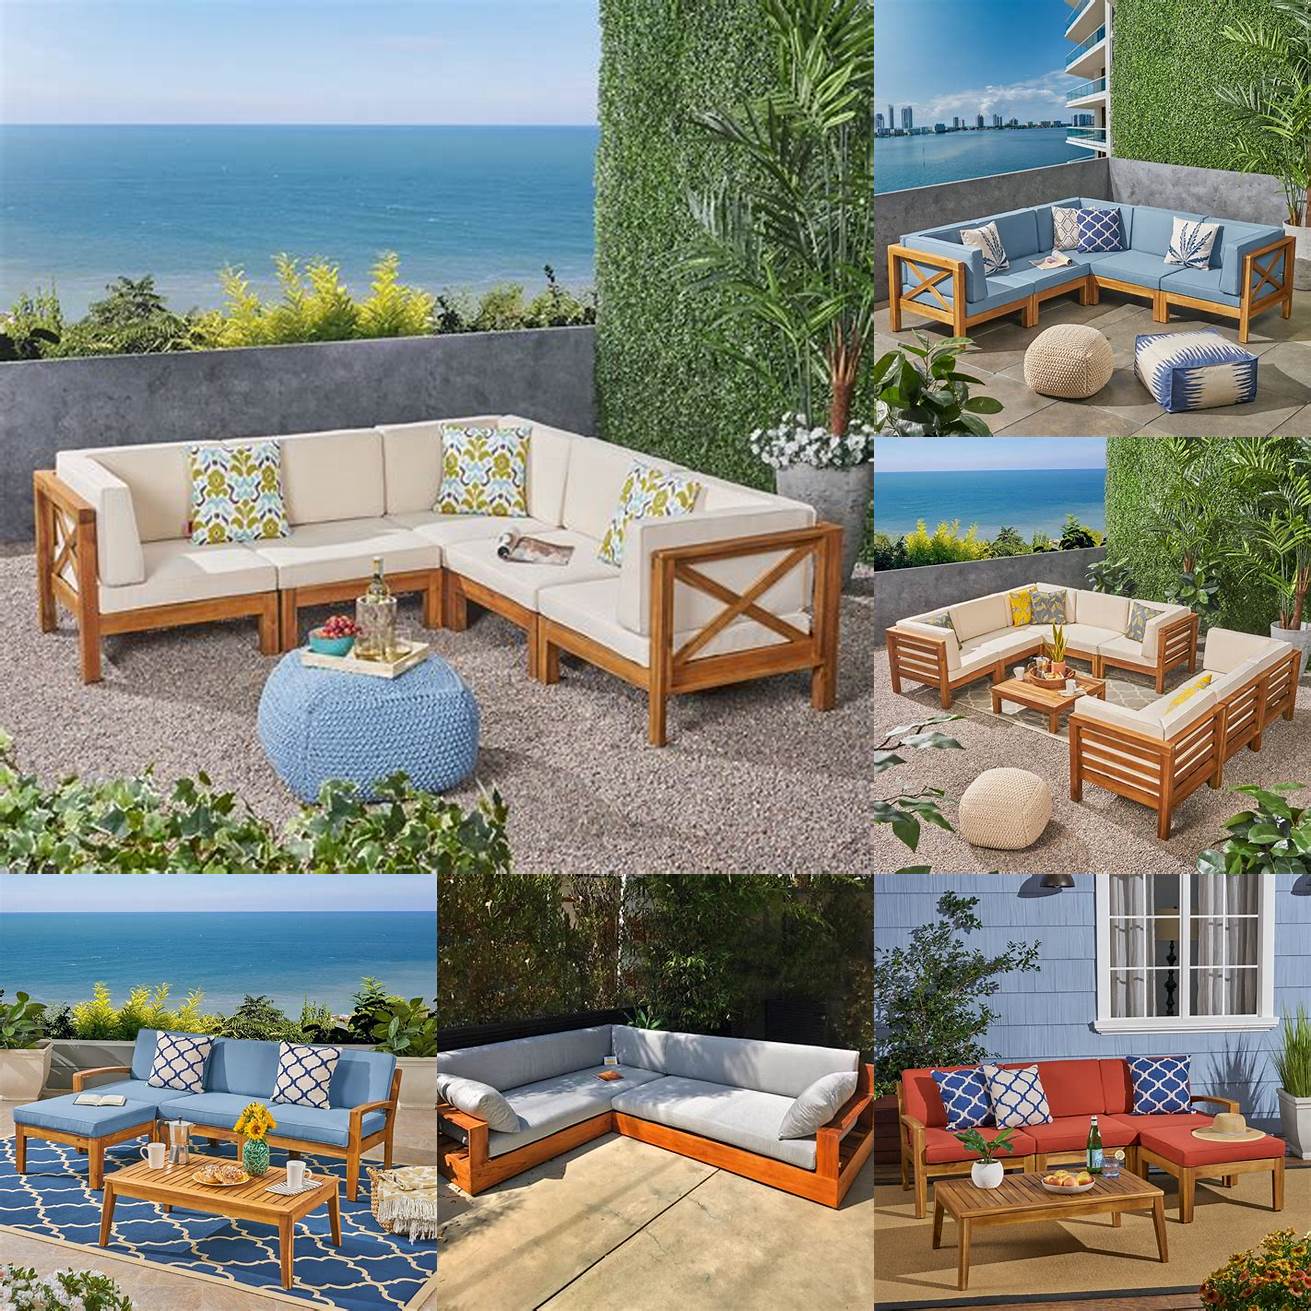 5 Teak outdoor furniture sectional deep cushions in a beach house